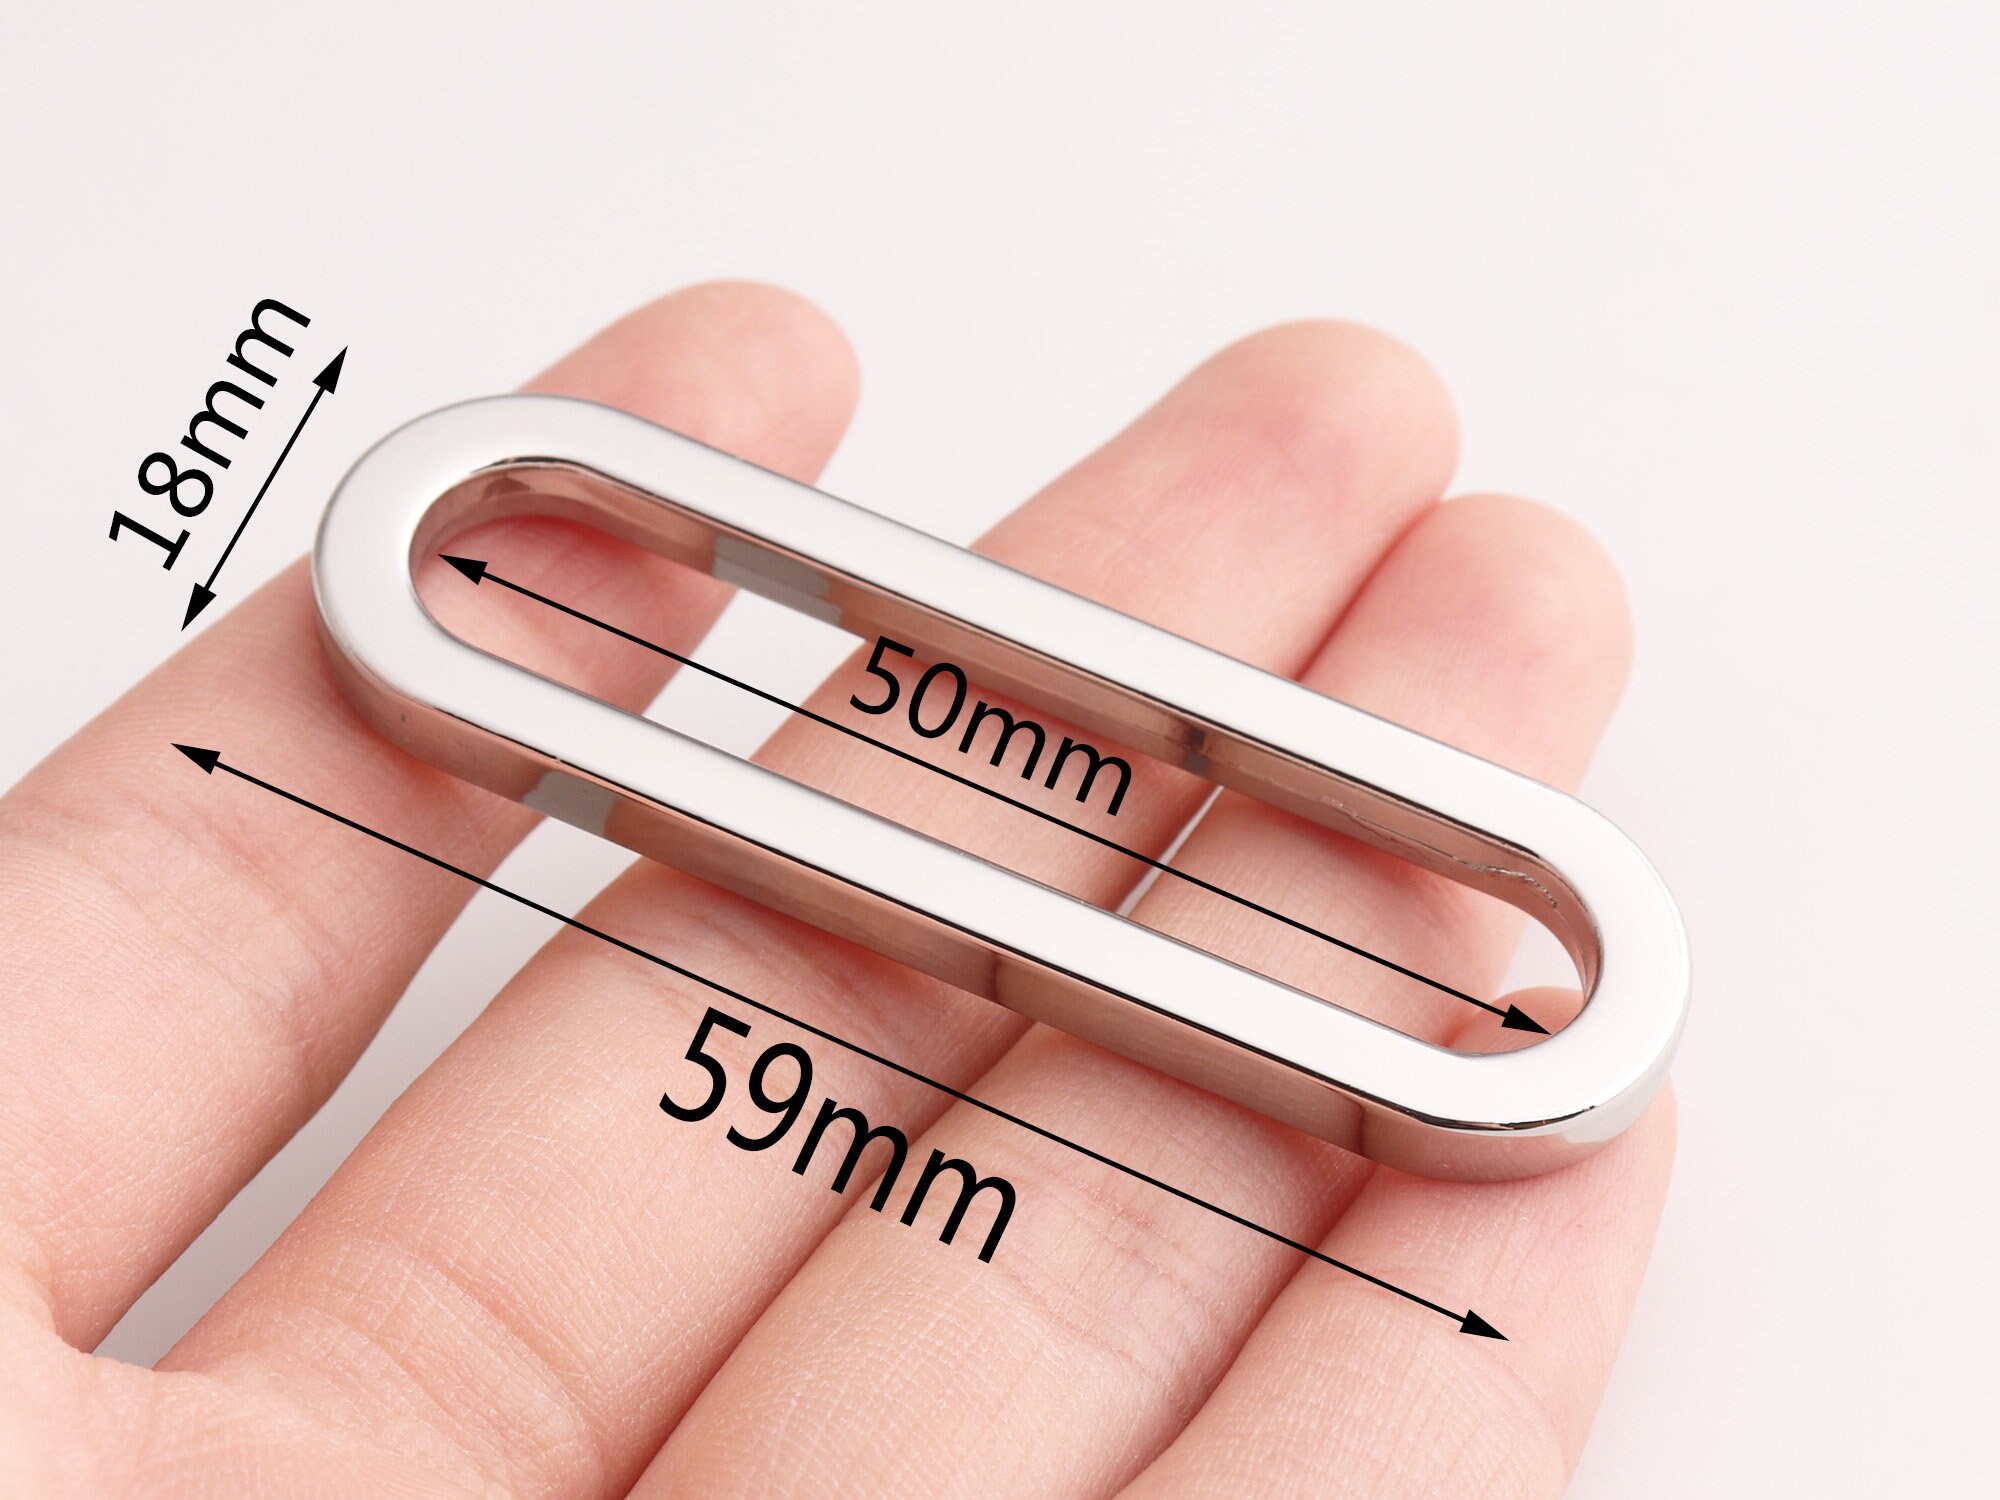 6pairs Rose Gold Clip on Earring Converter Studs to Clp on Earrings Changer  Stud to Clips Clip on Earrings -  Hong Kong